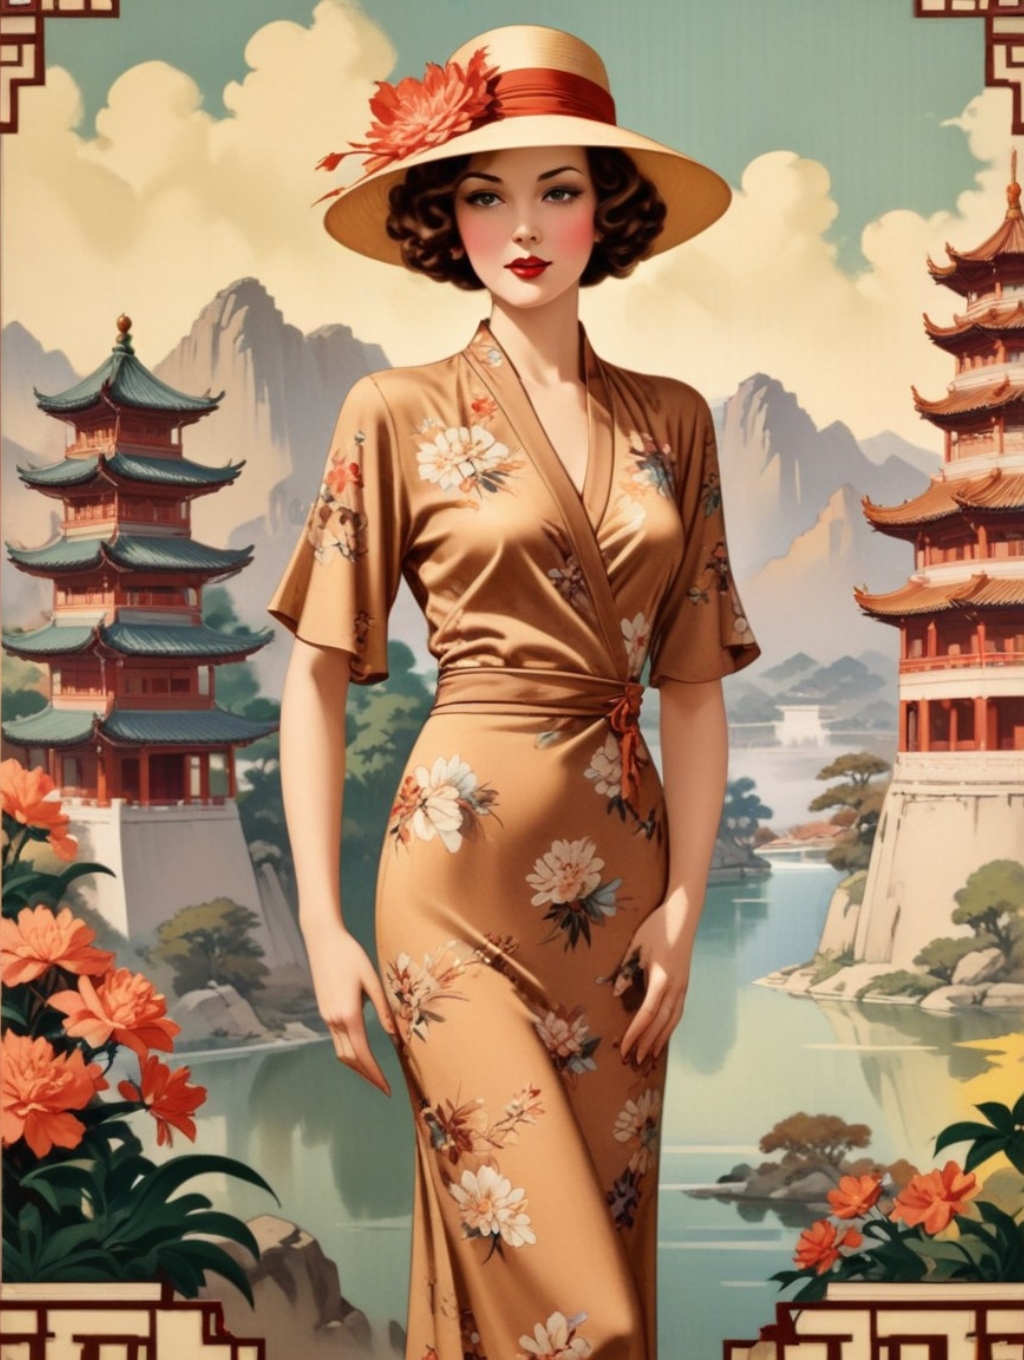 Art Deco Travel Posters Women: Image Frames & Self-Portraits-Theme:4